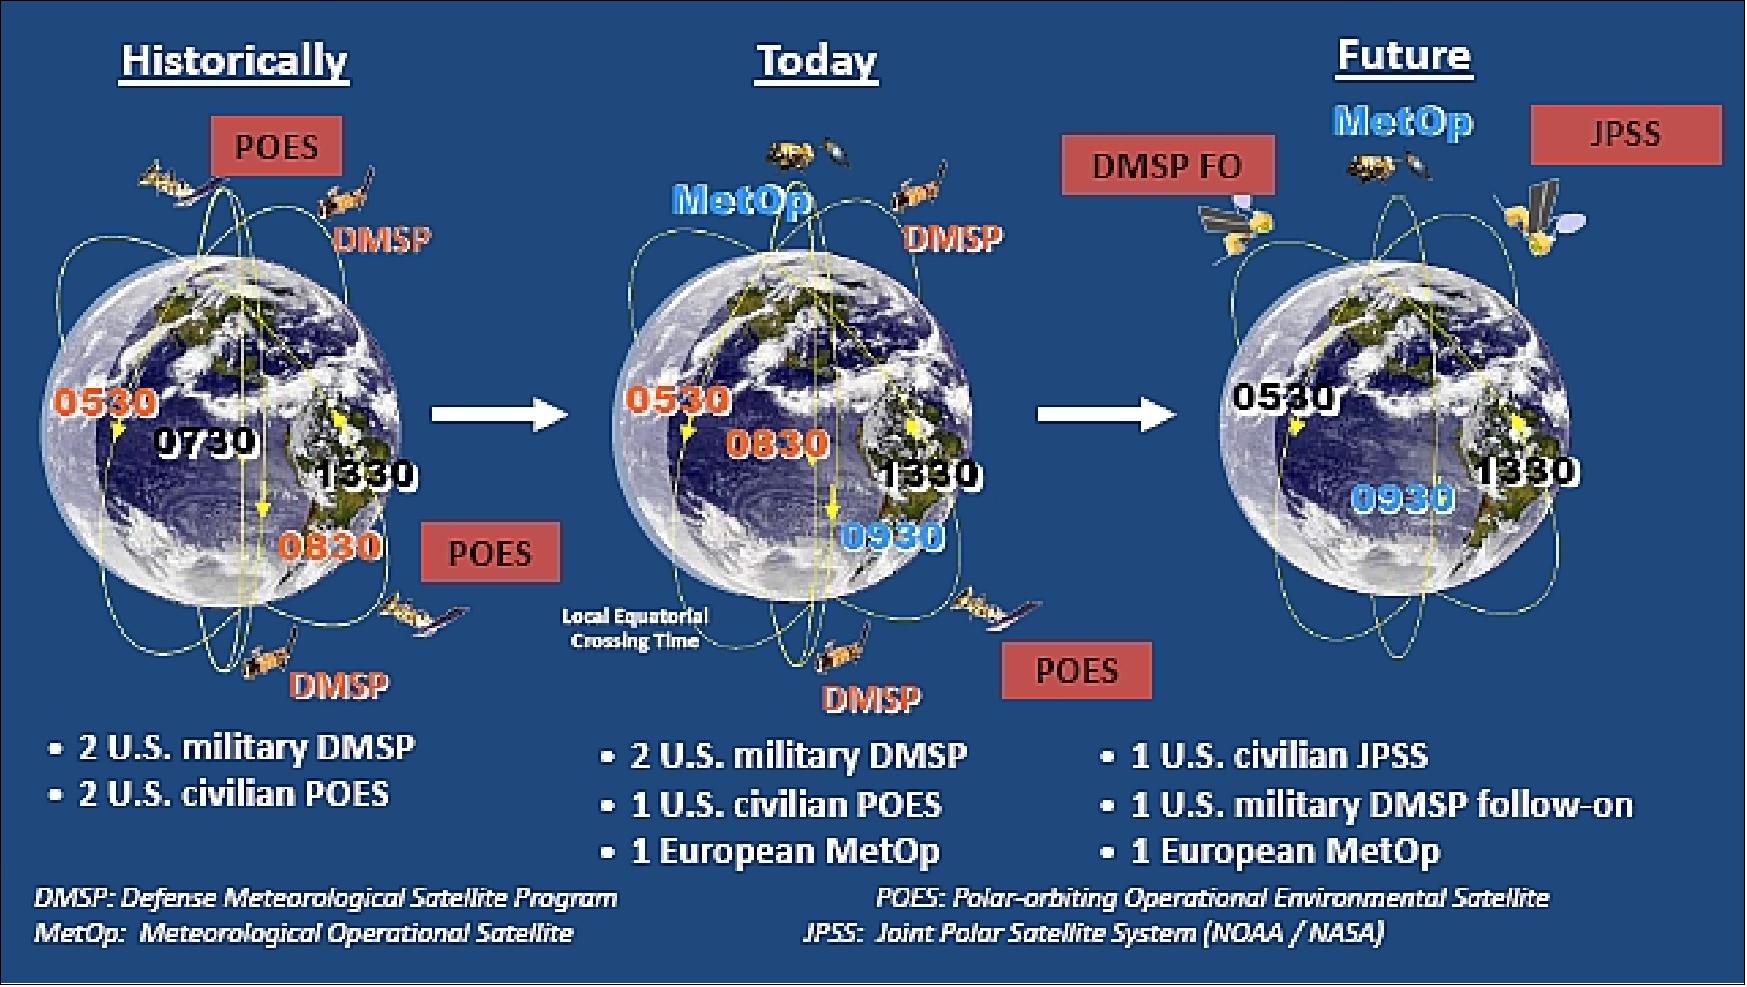 Figure 1: Overview of the polar meteorological program evolution in 2010 (image credit: NOAA)